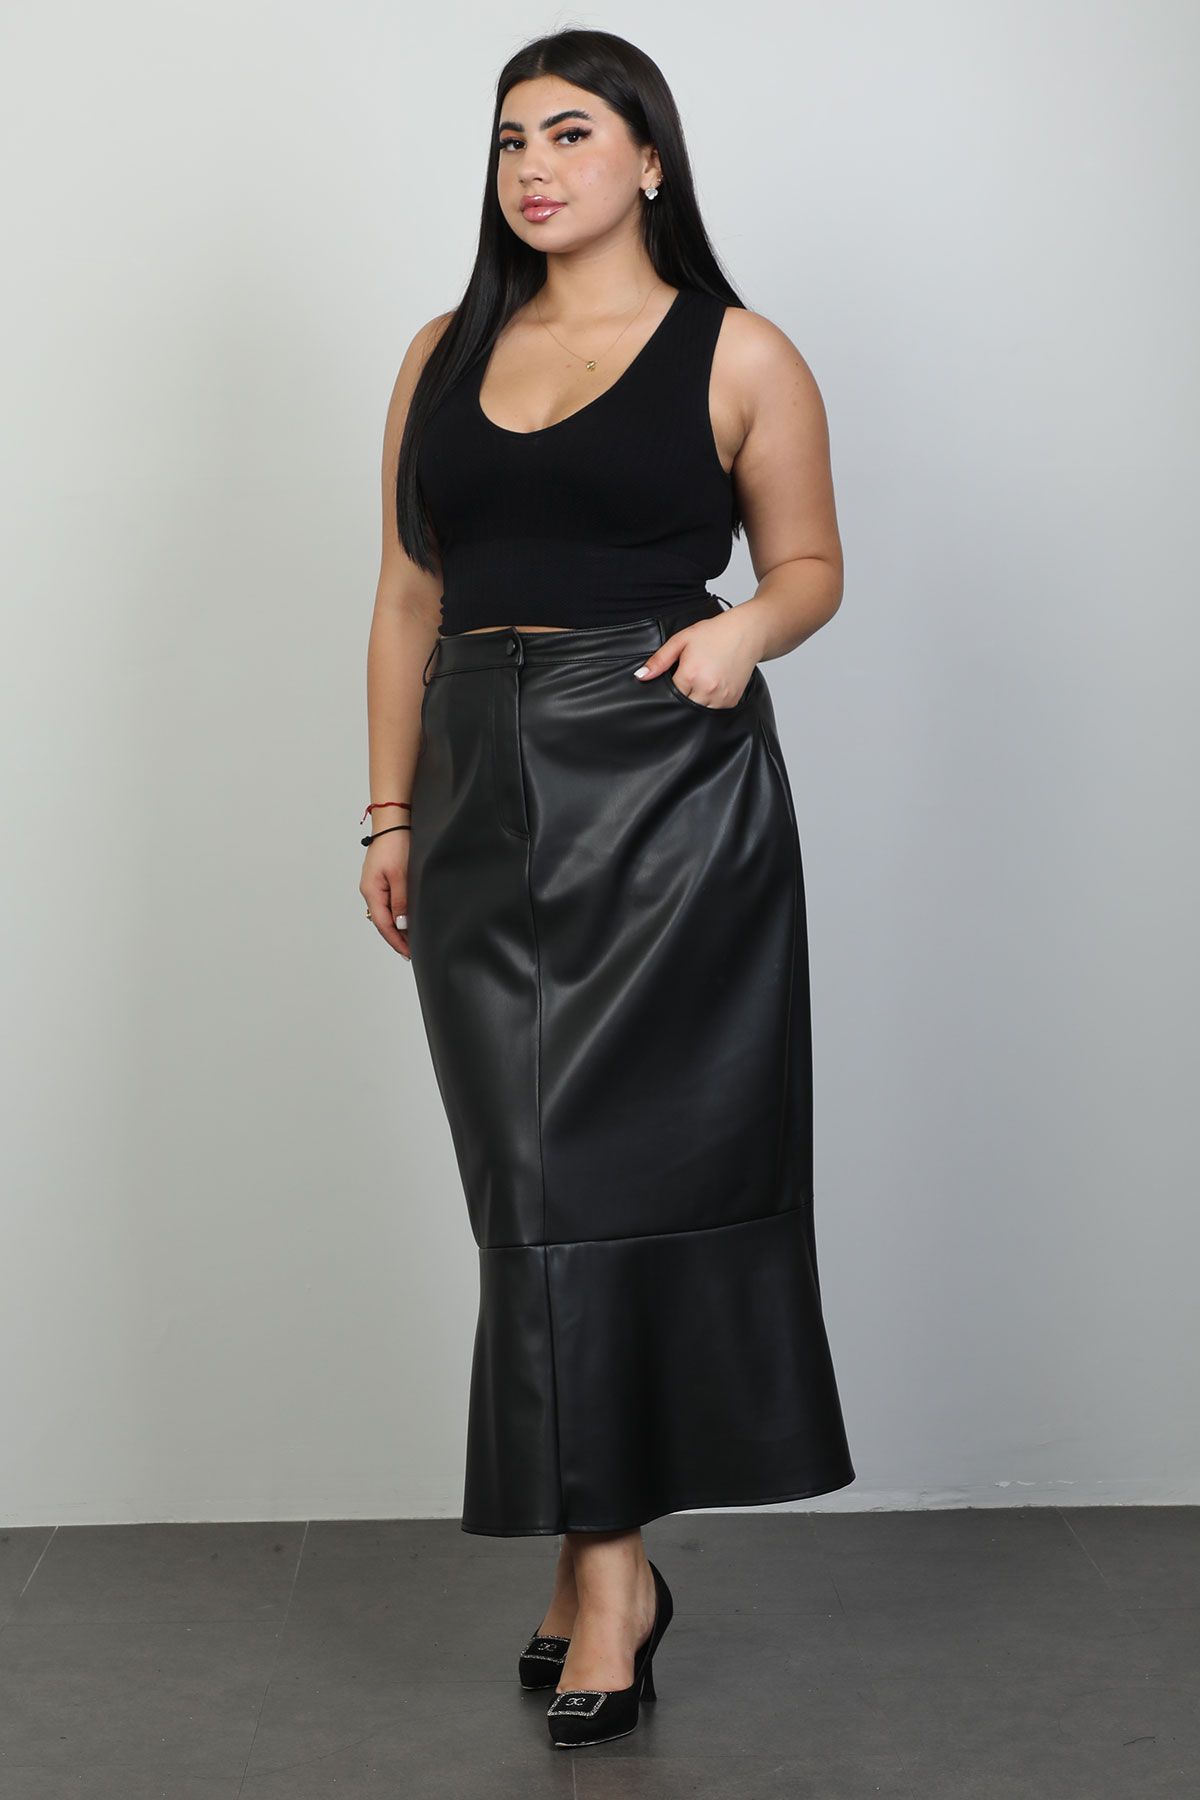 Mira Mia K249819xl Black Plus Size Women Skirt Dosso Dossi 